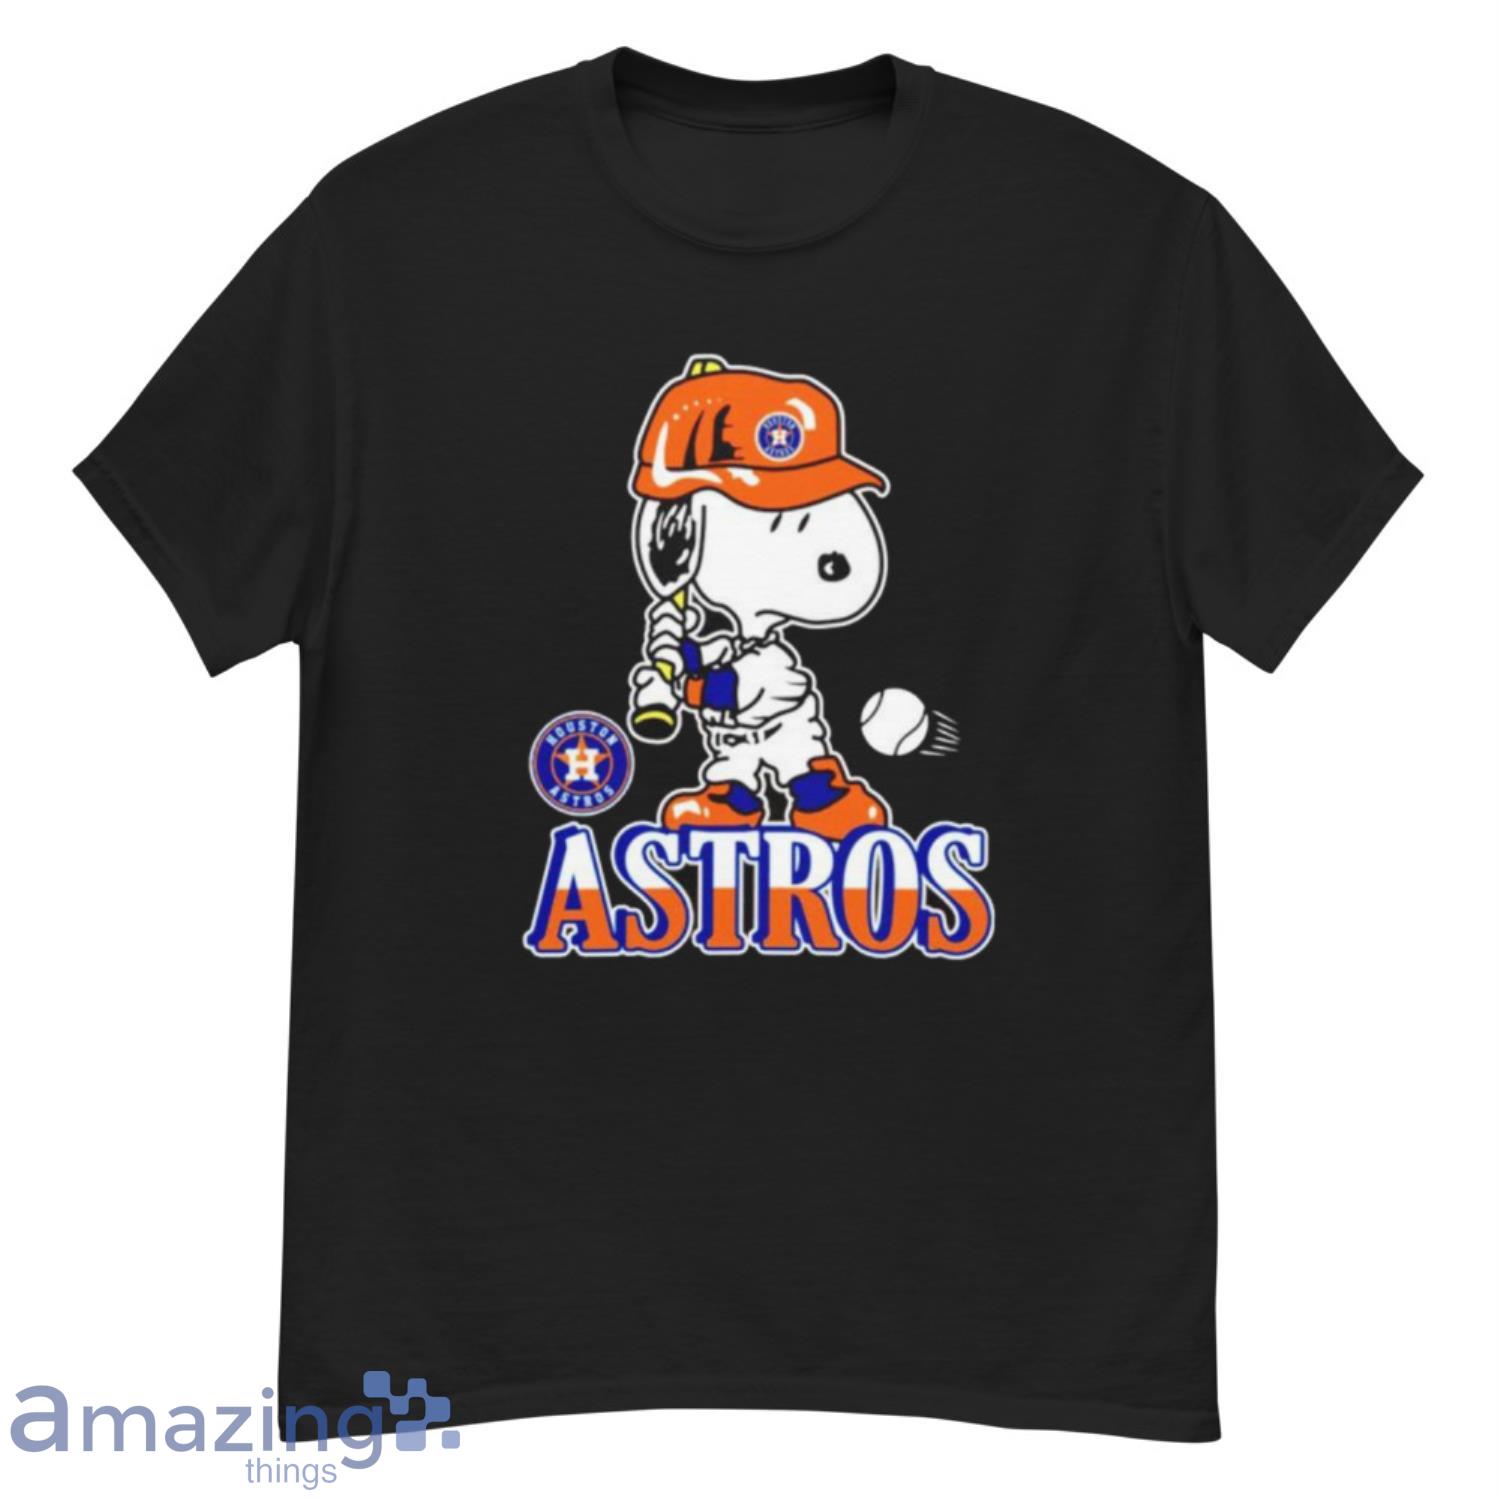 Houston Astros Shirt - Colorful Baseball Unisex Hoodie Short Sleeve